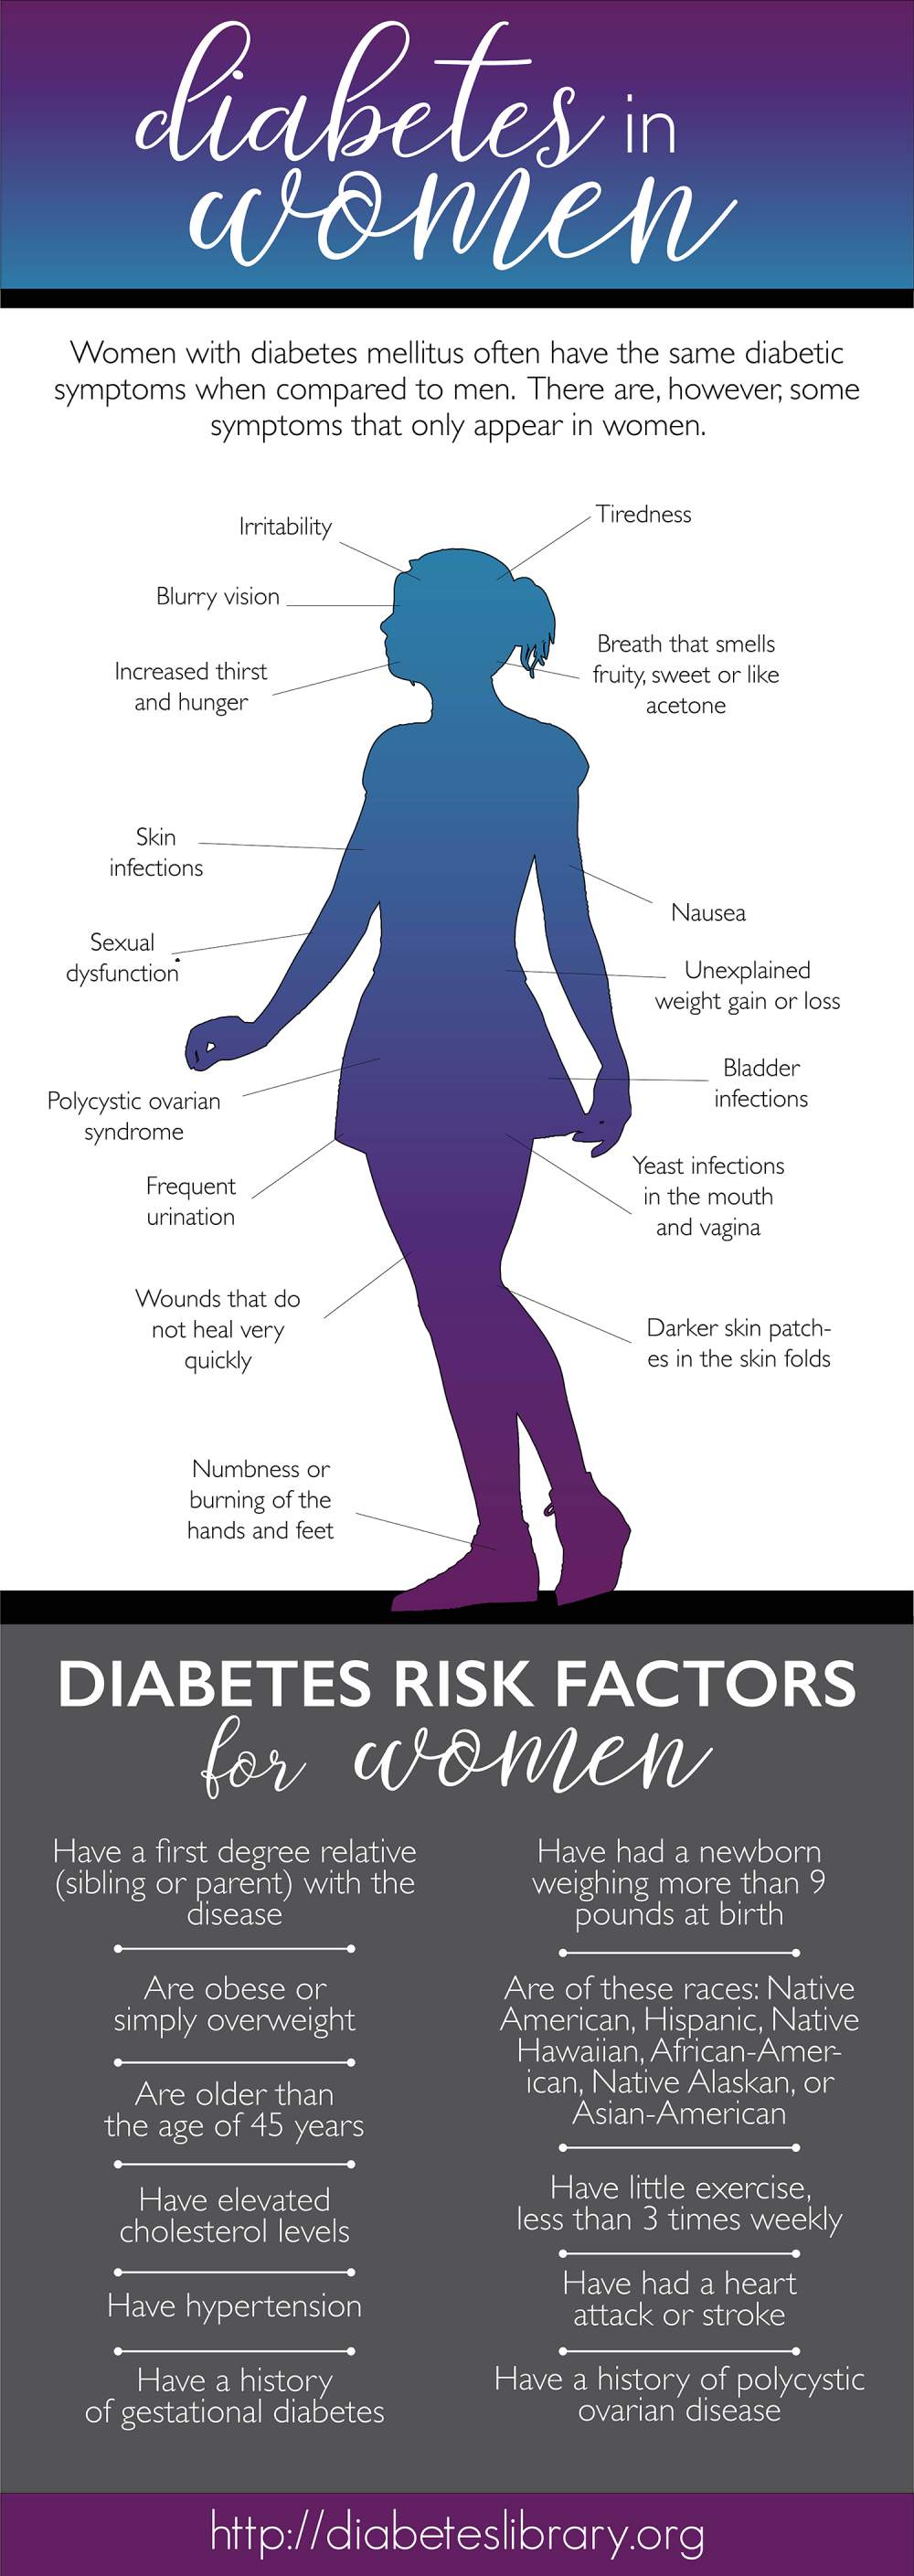 signs-of-diabetes-in-women